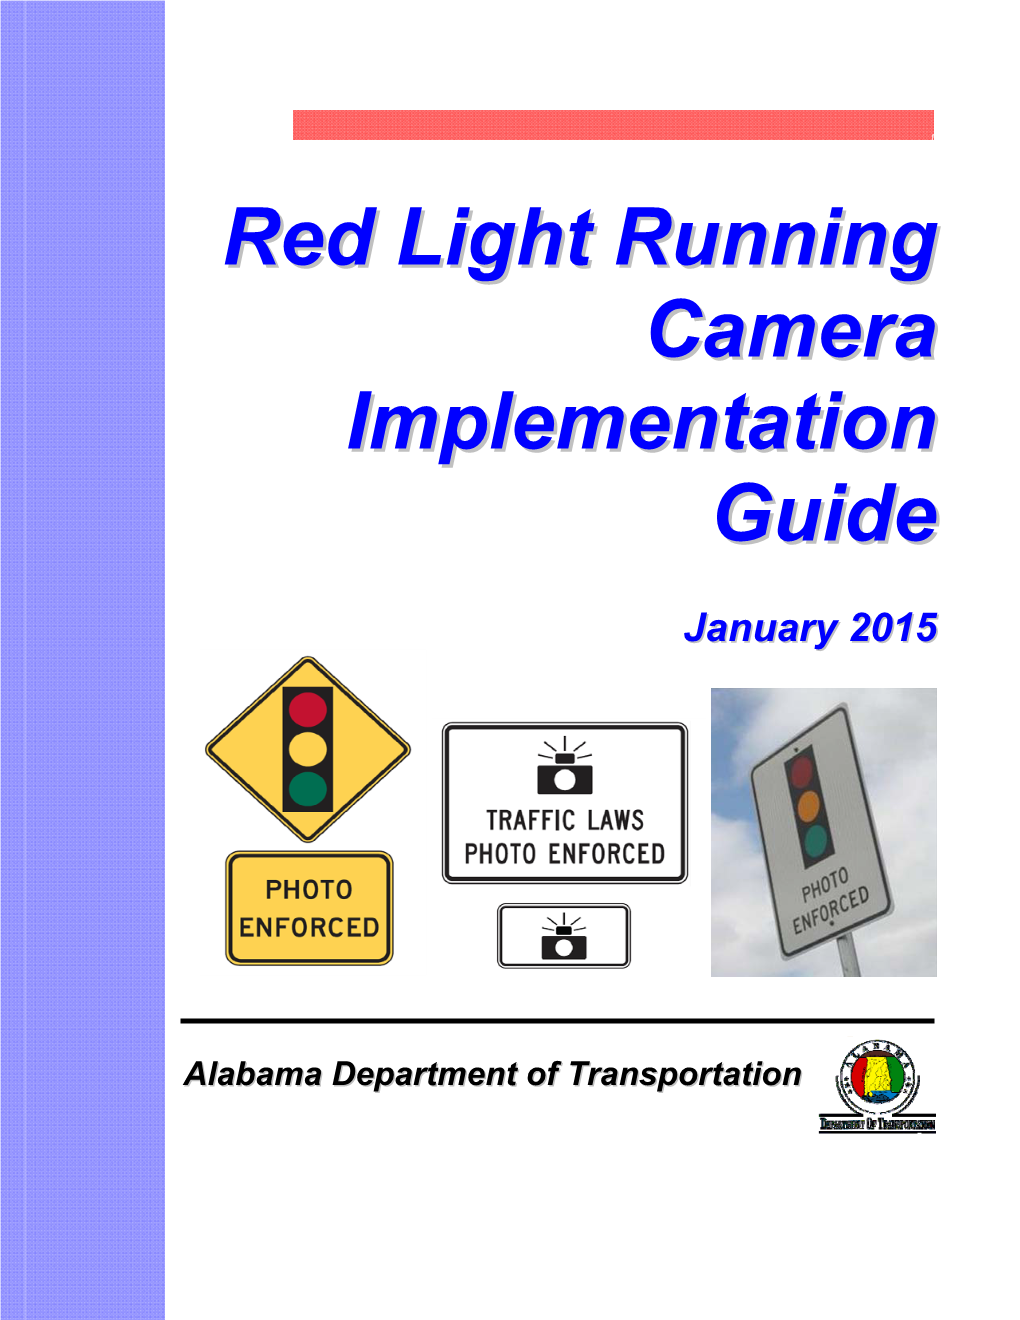 Red Light Running Camera Implementation Guide